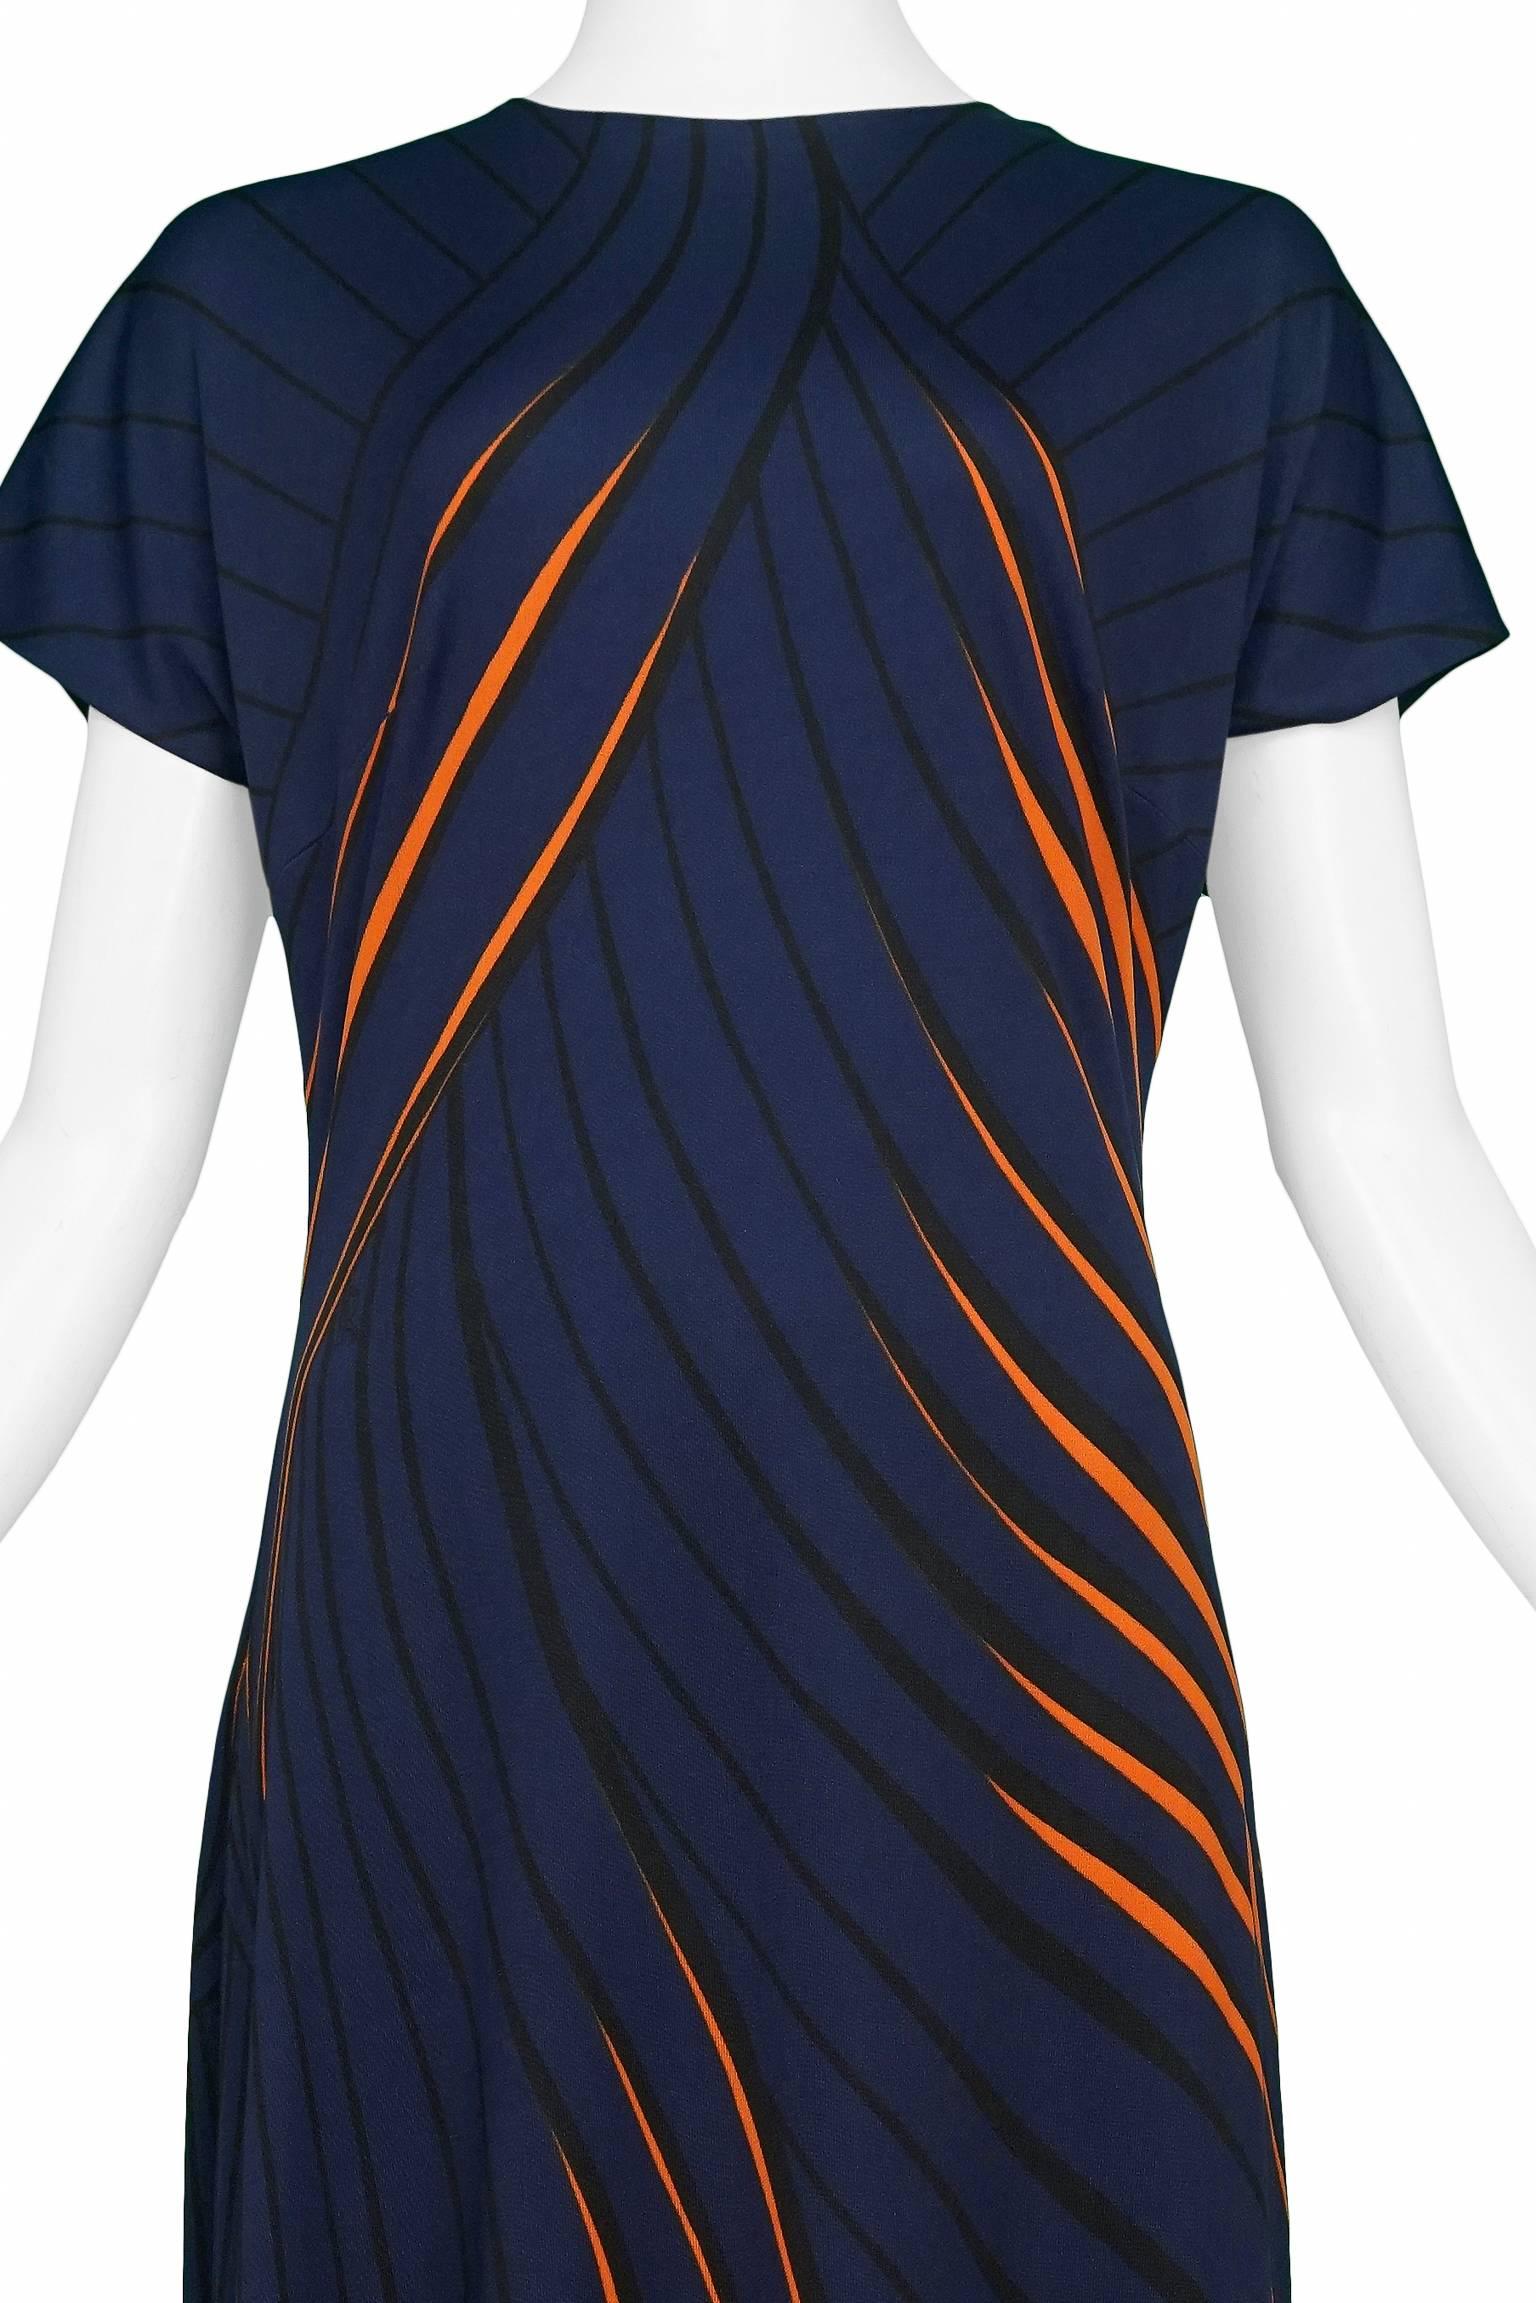 Black Navy & Orange Abstract Feather Dress 